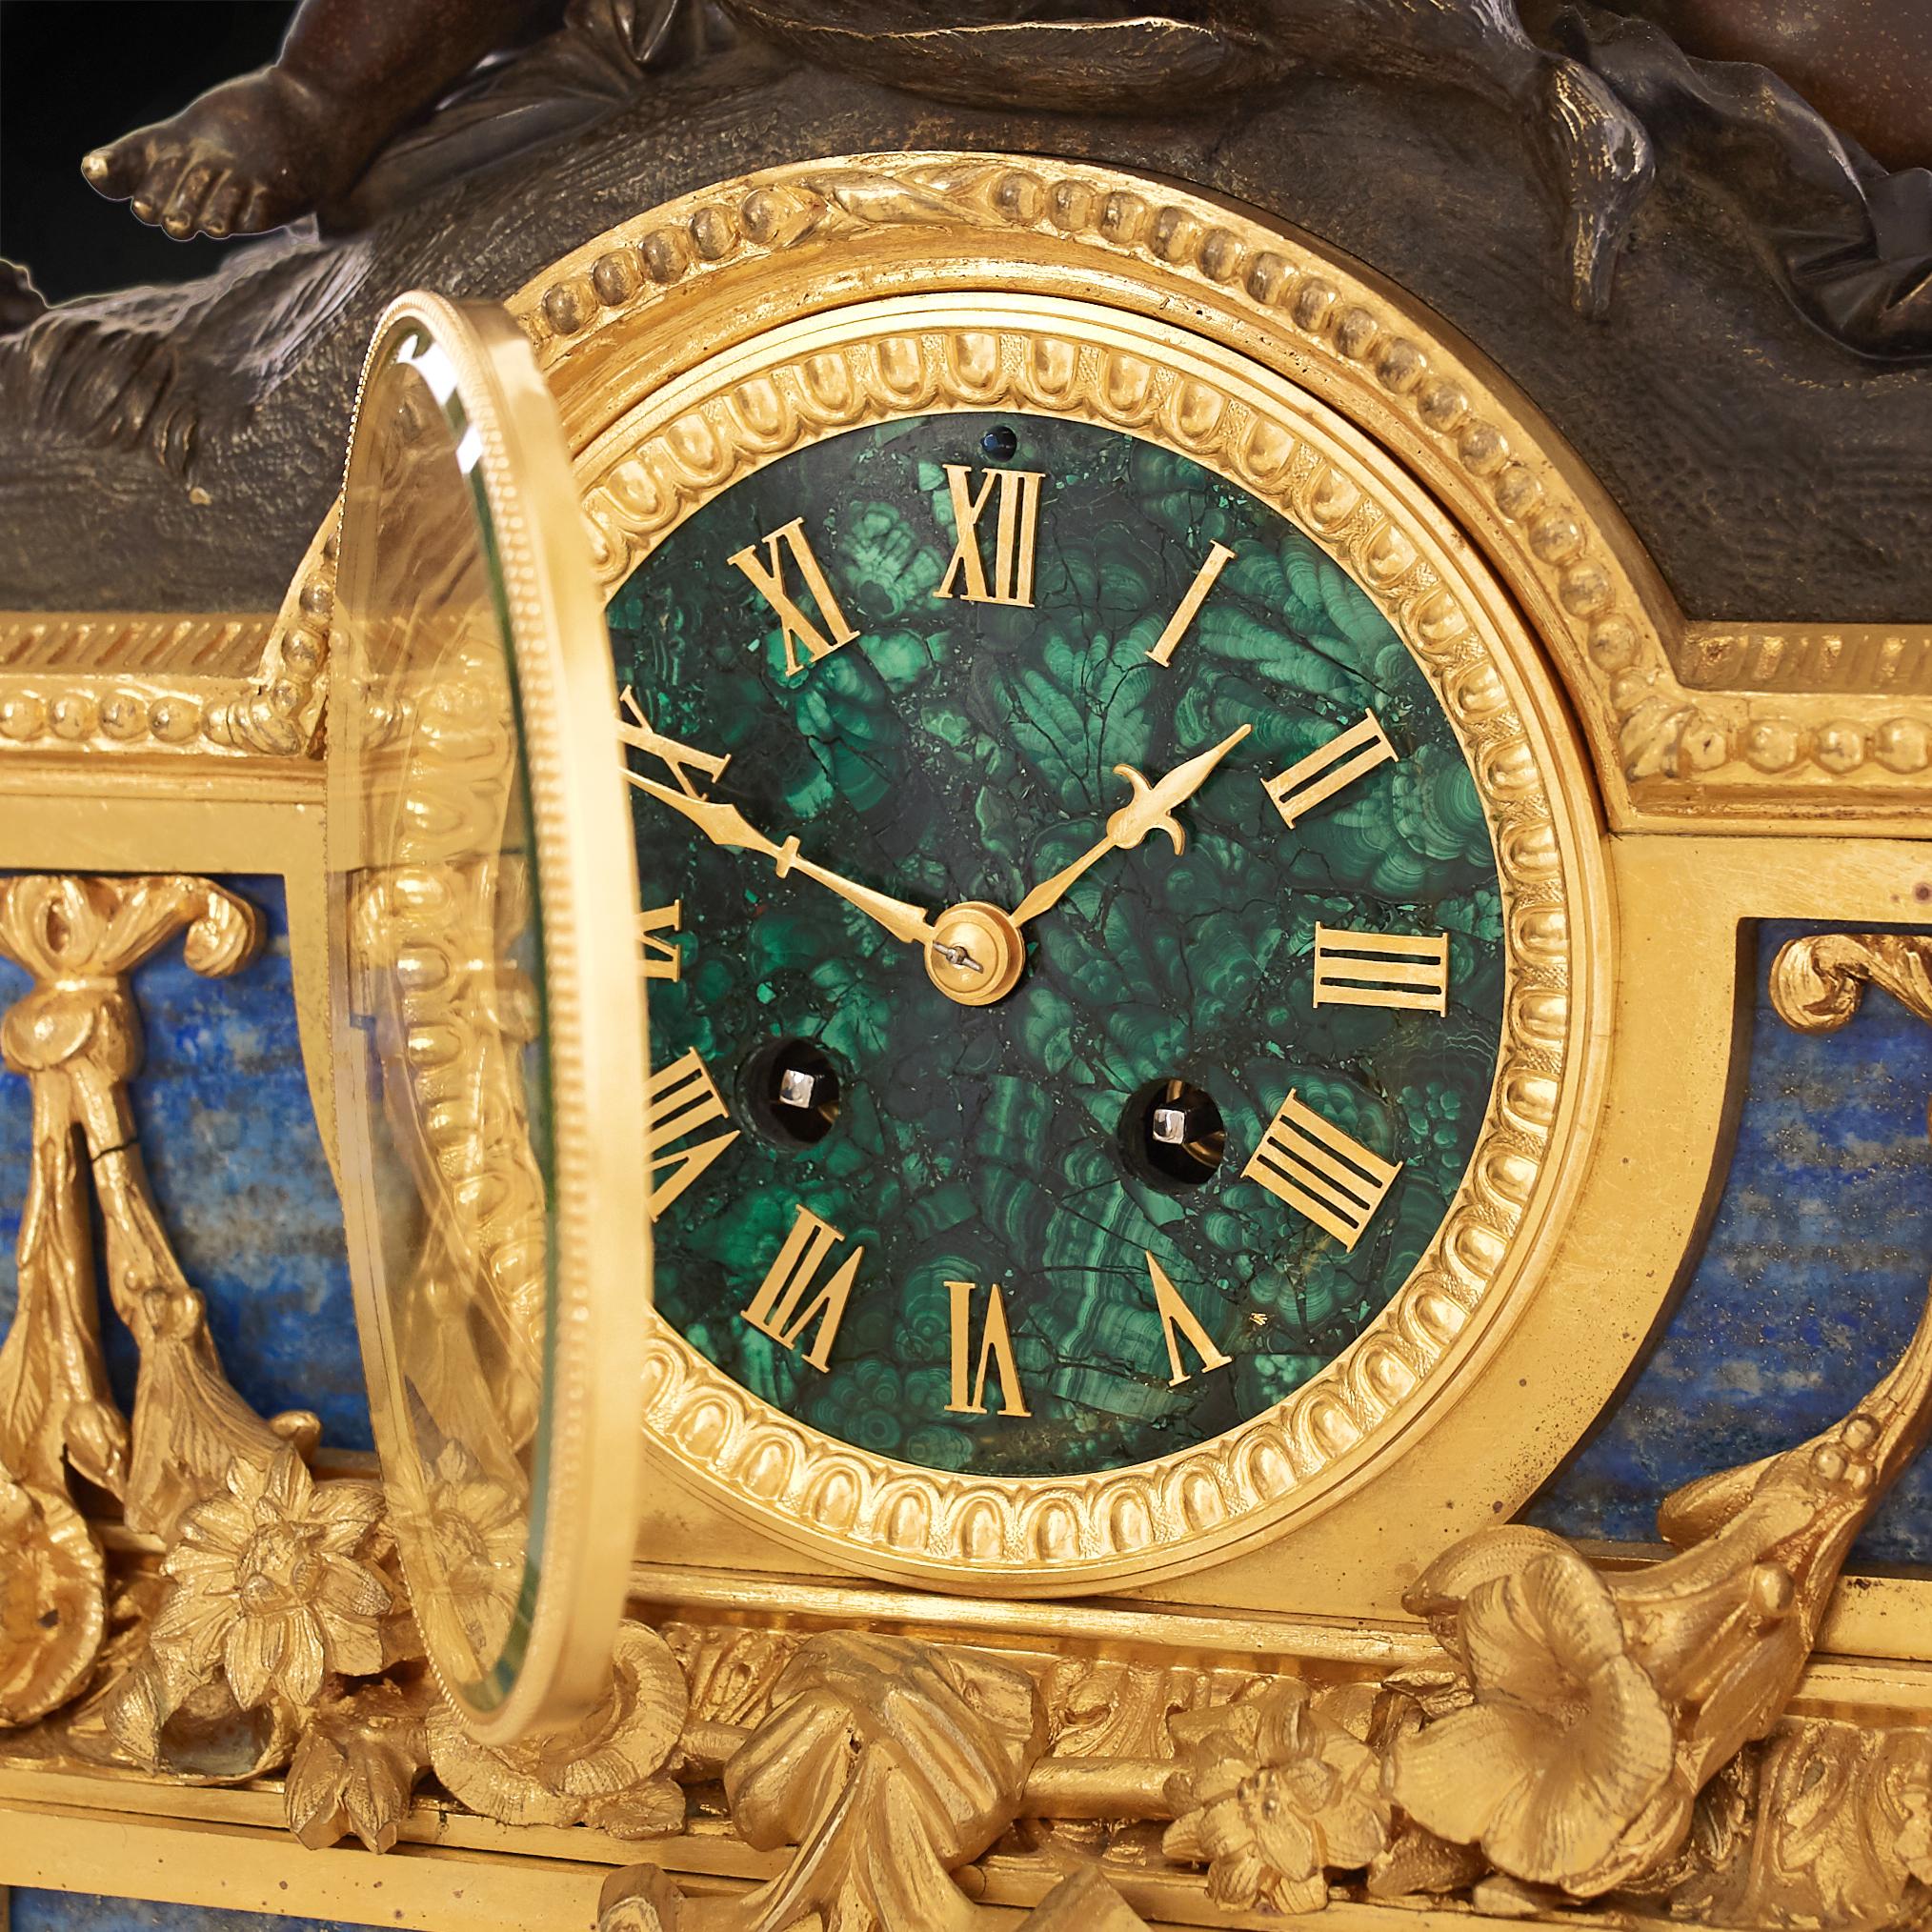 Mantel Clock 19th Century Napoleon III Period For Sale 6